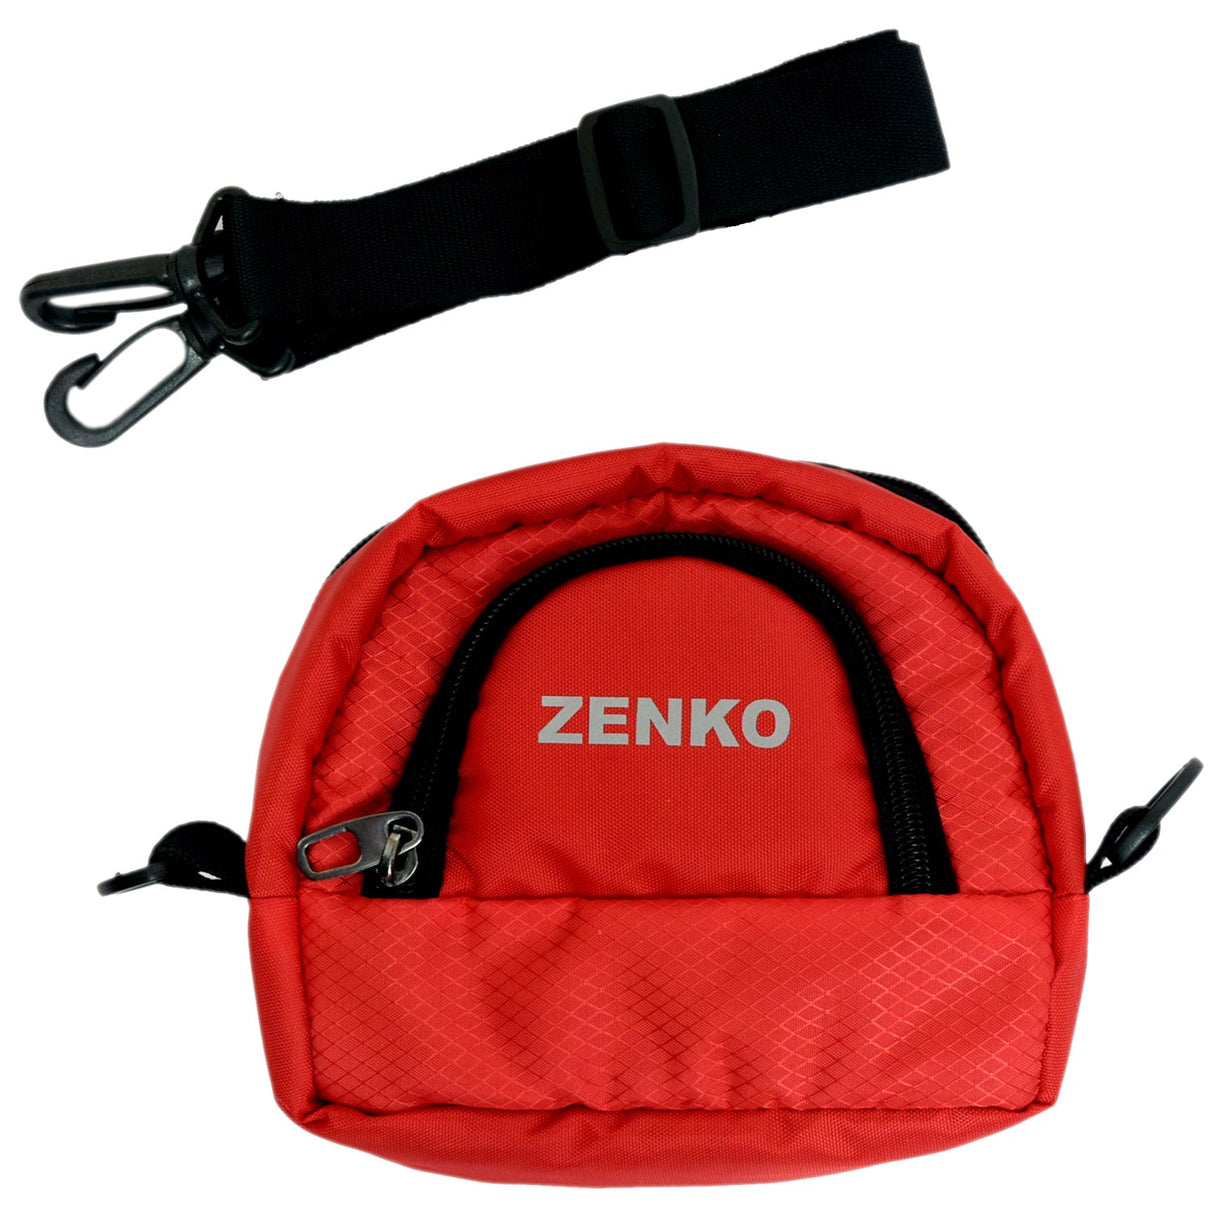 Zenko pouch for mini 9 instant camera bag Red